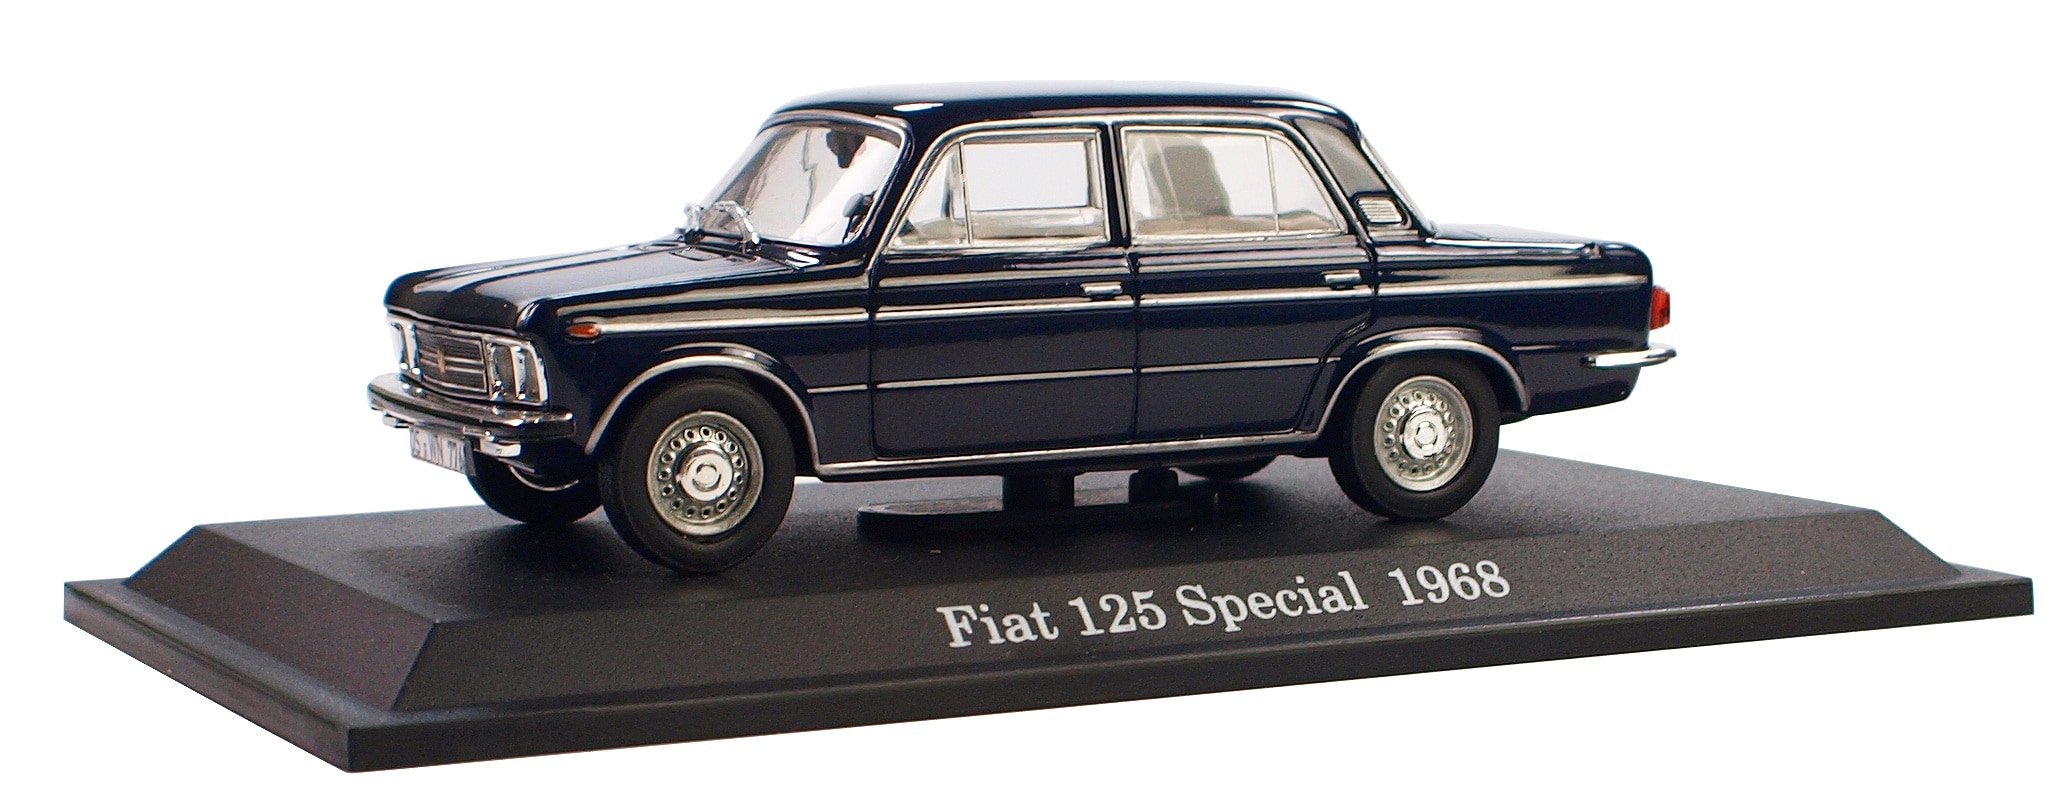 1698 black Fiat 125 special die-cast model